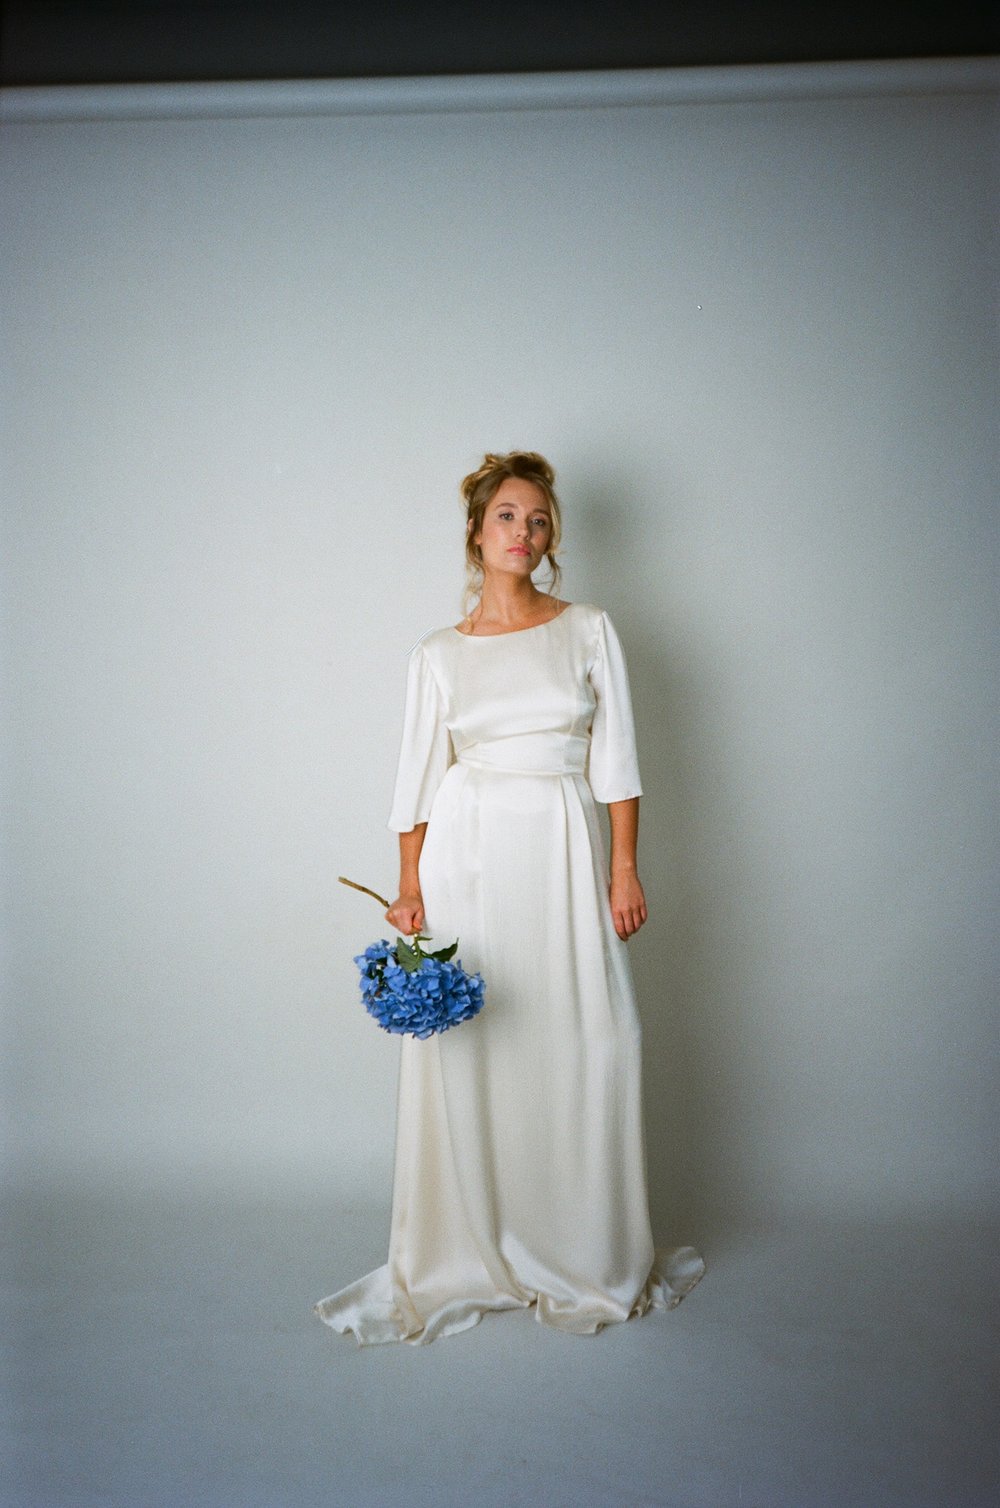 Analogue-shoot-Hollie-Cornish-photographer-Kate-Beaumont-wedding-gowns-Sheffield-55.jpg